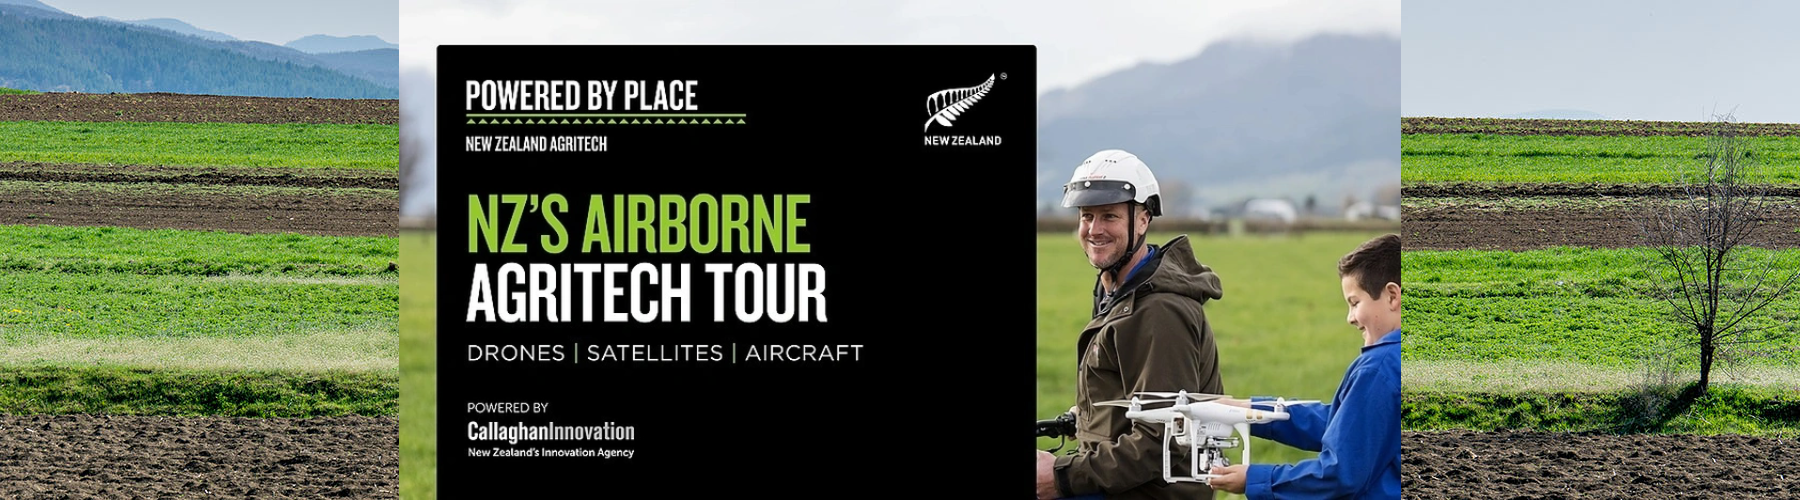 NZ’s Airborne Agritech Tour